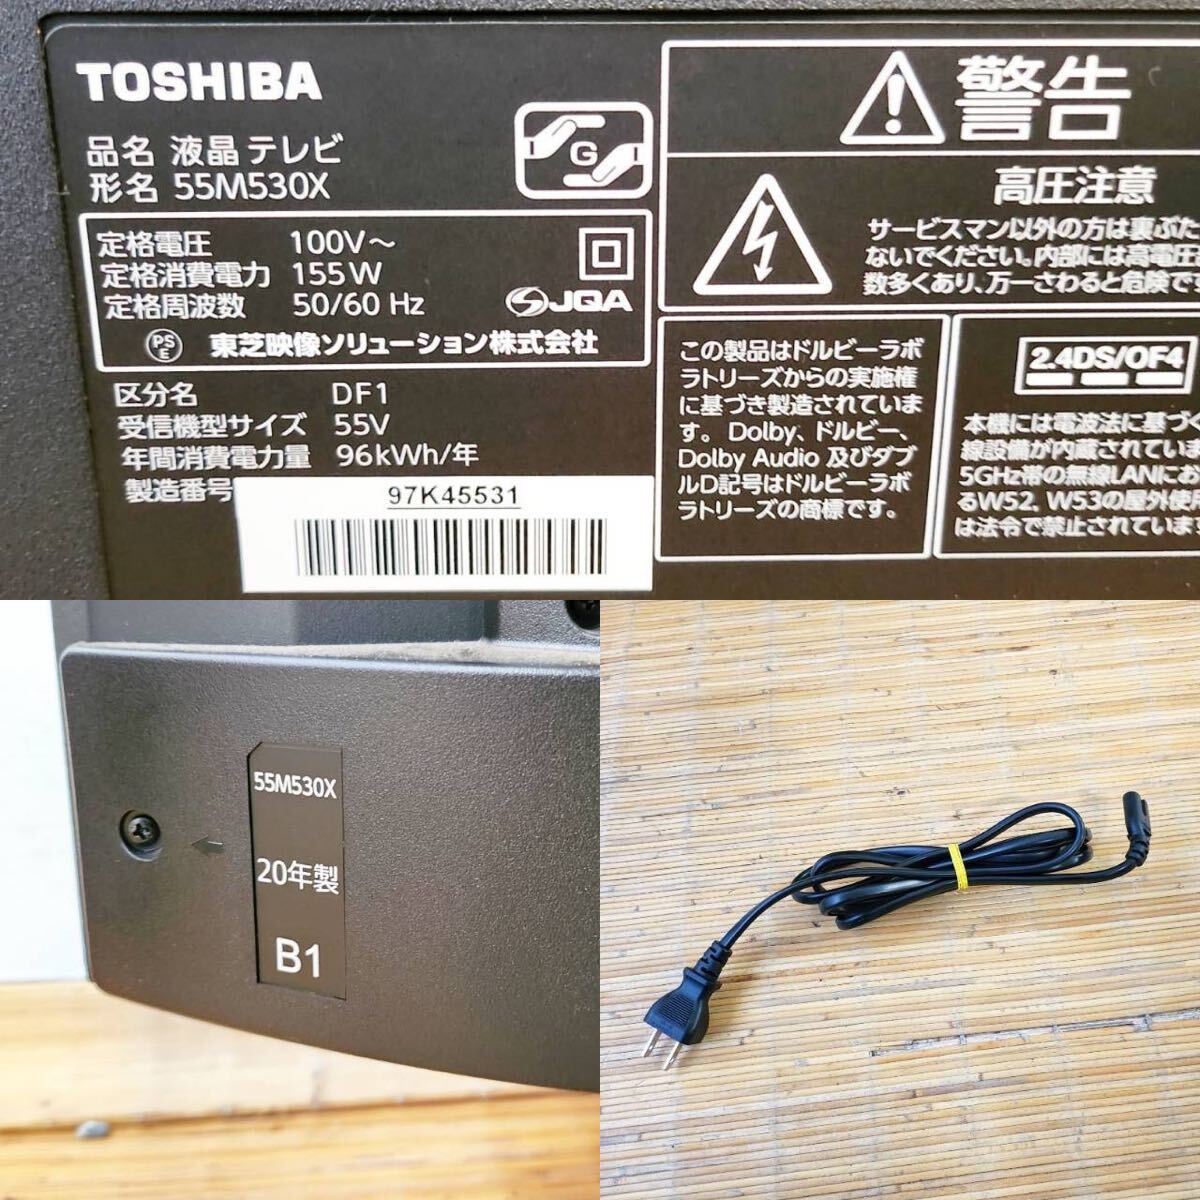 TOSHIBA 東芝 REGZA 液晶テレビ 4Kチューナー内蔵 55M530X 55V型 2020年製【NK5763】_画像8